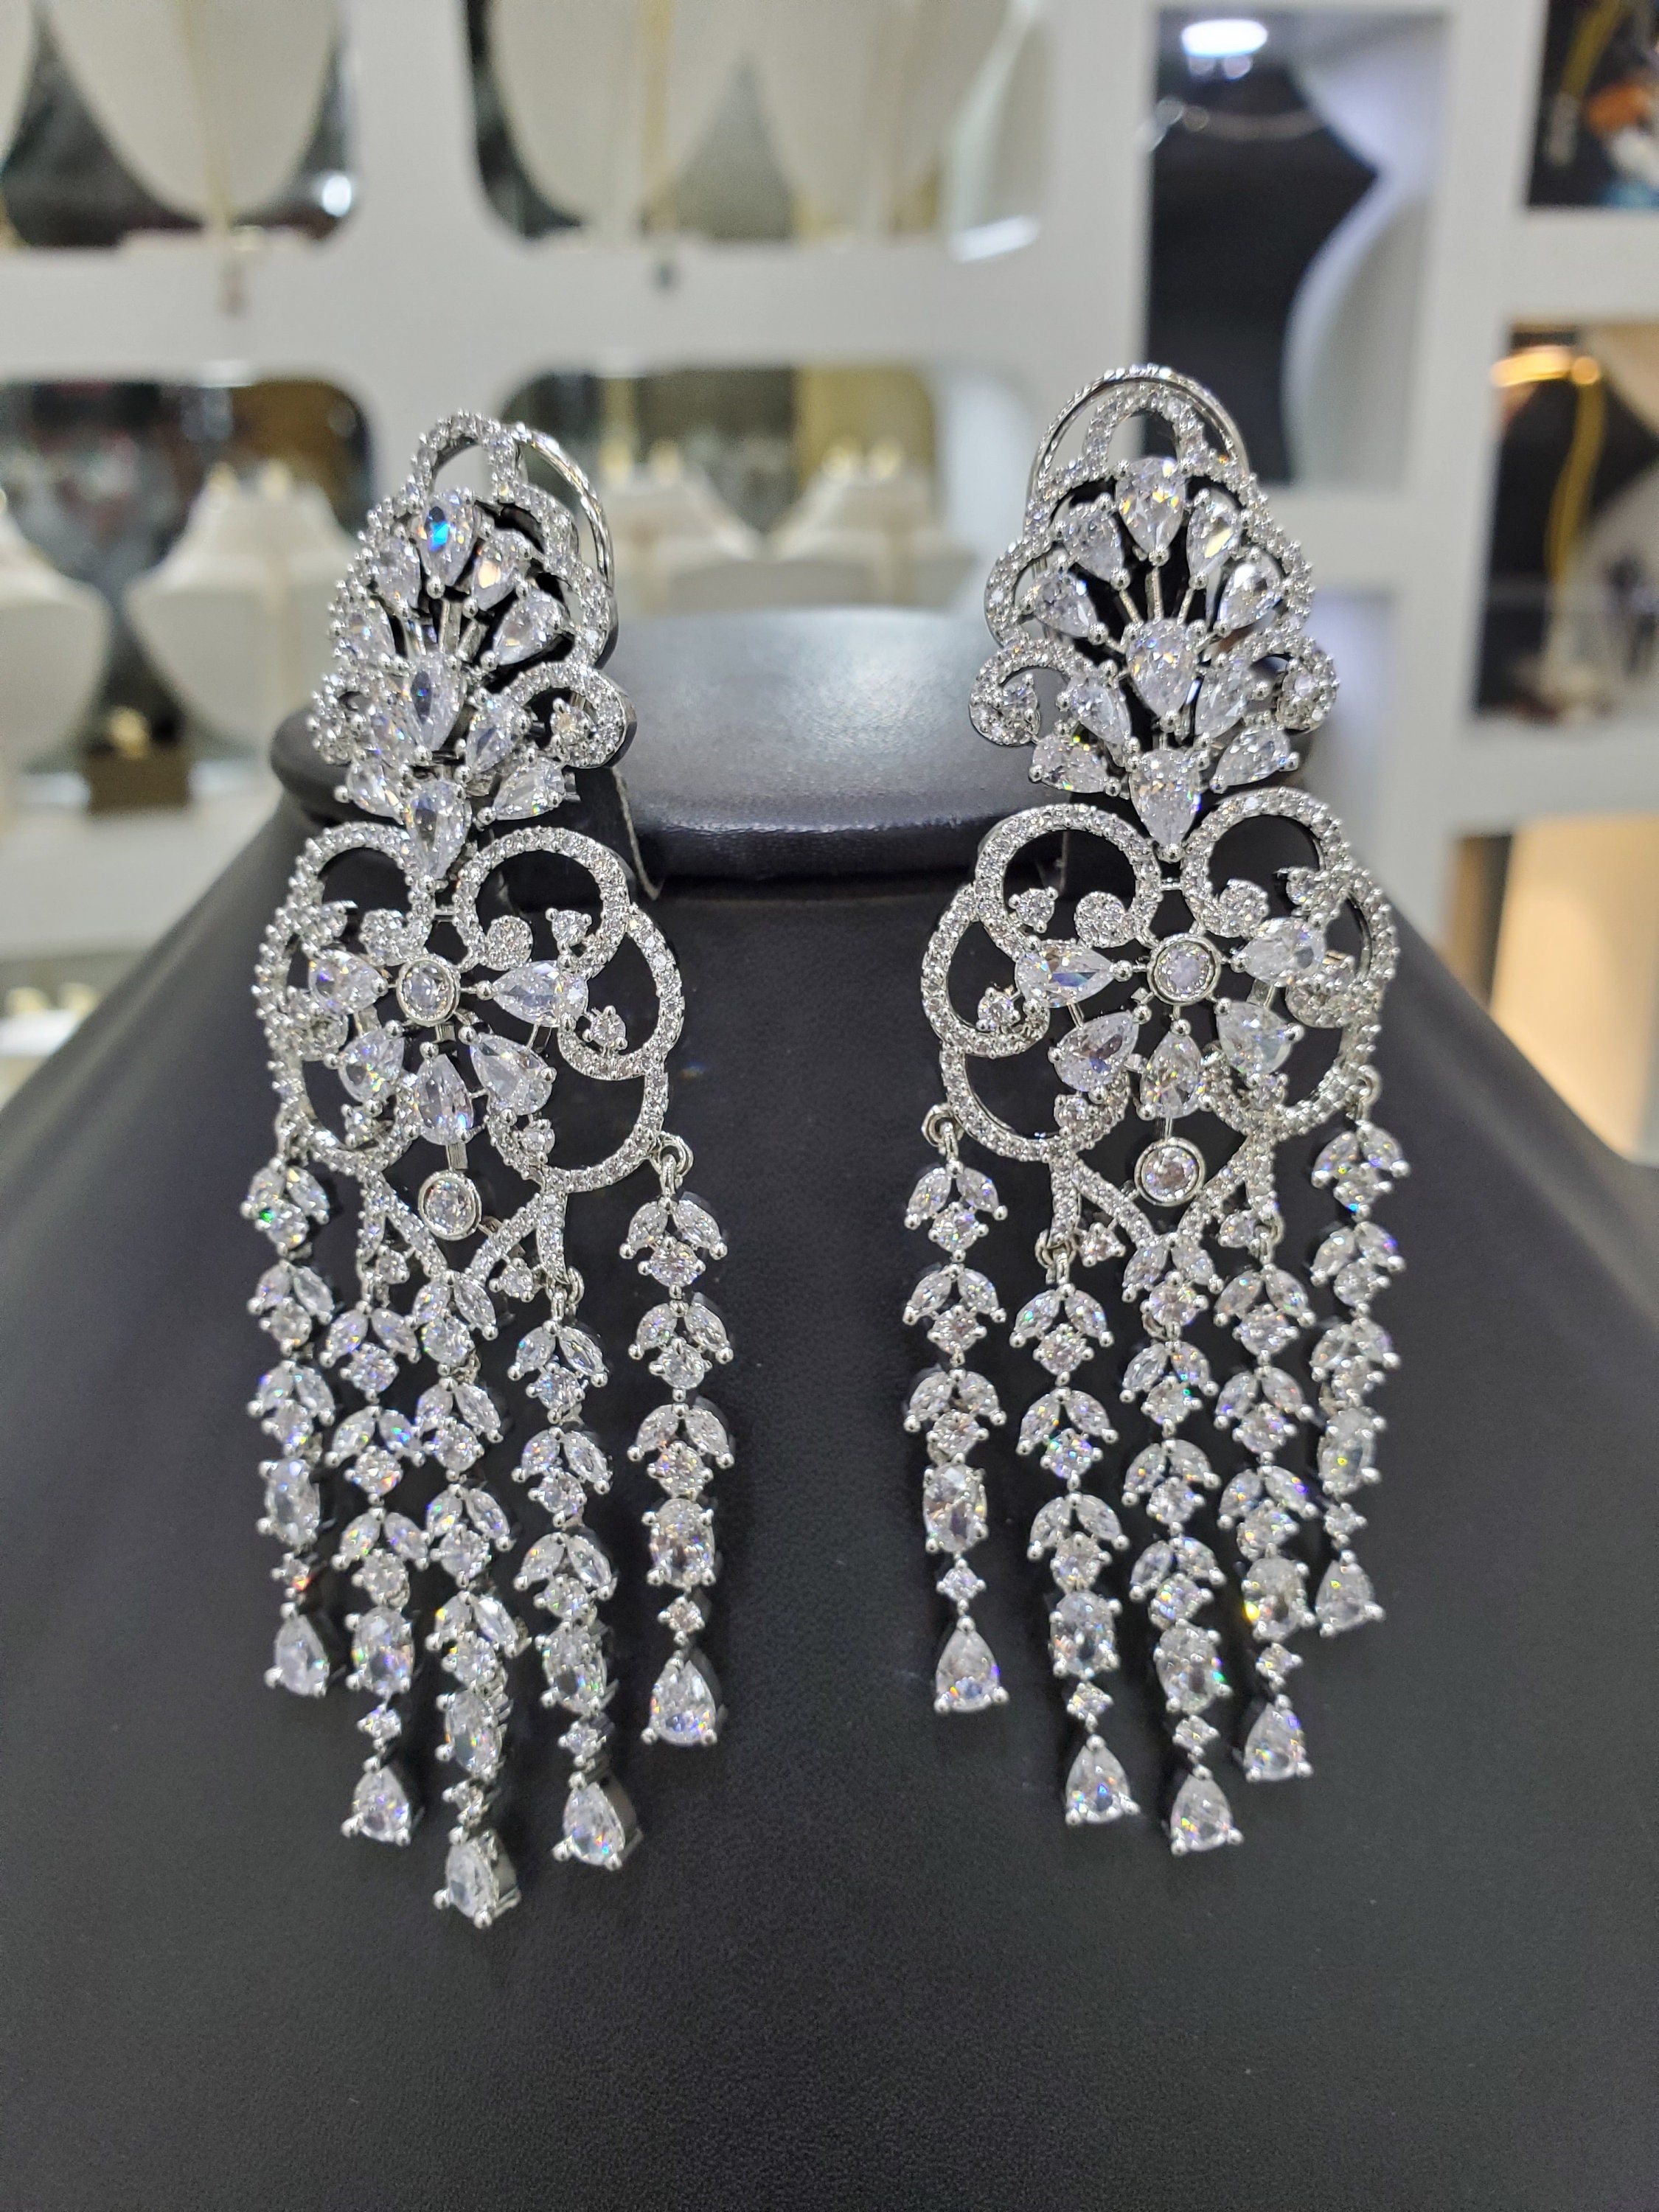 Explore more than 127 long diamond earrings latest